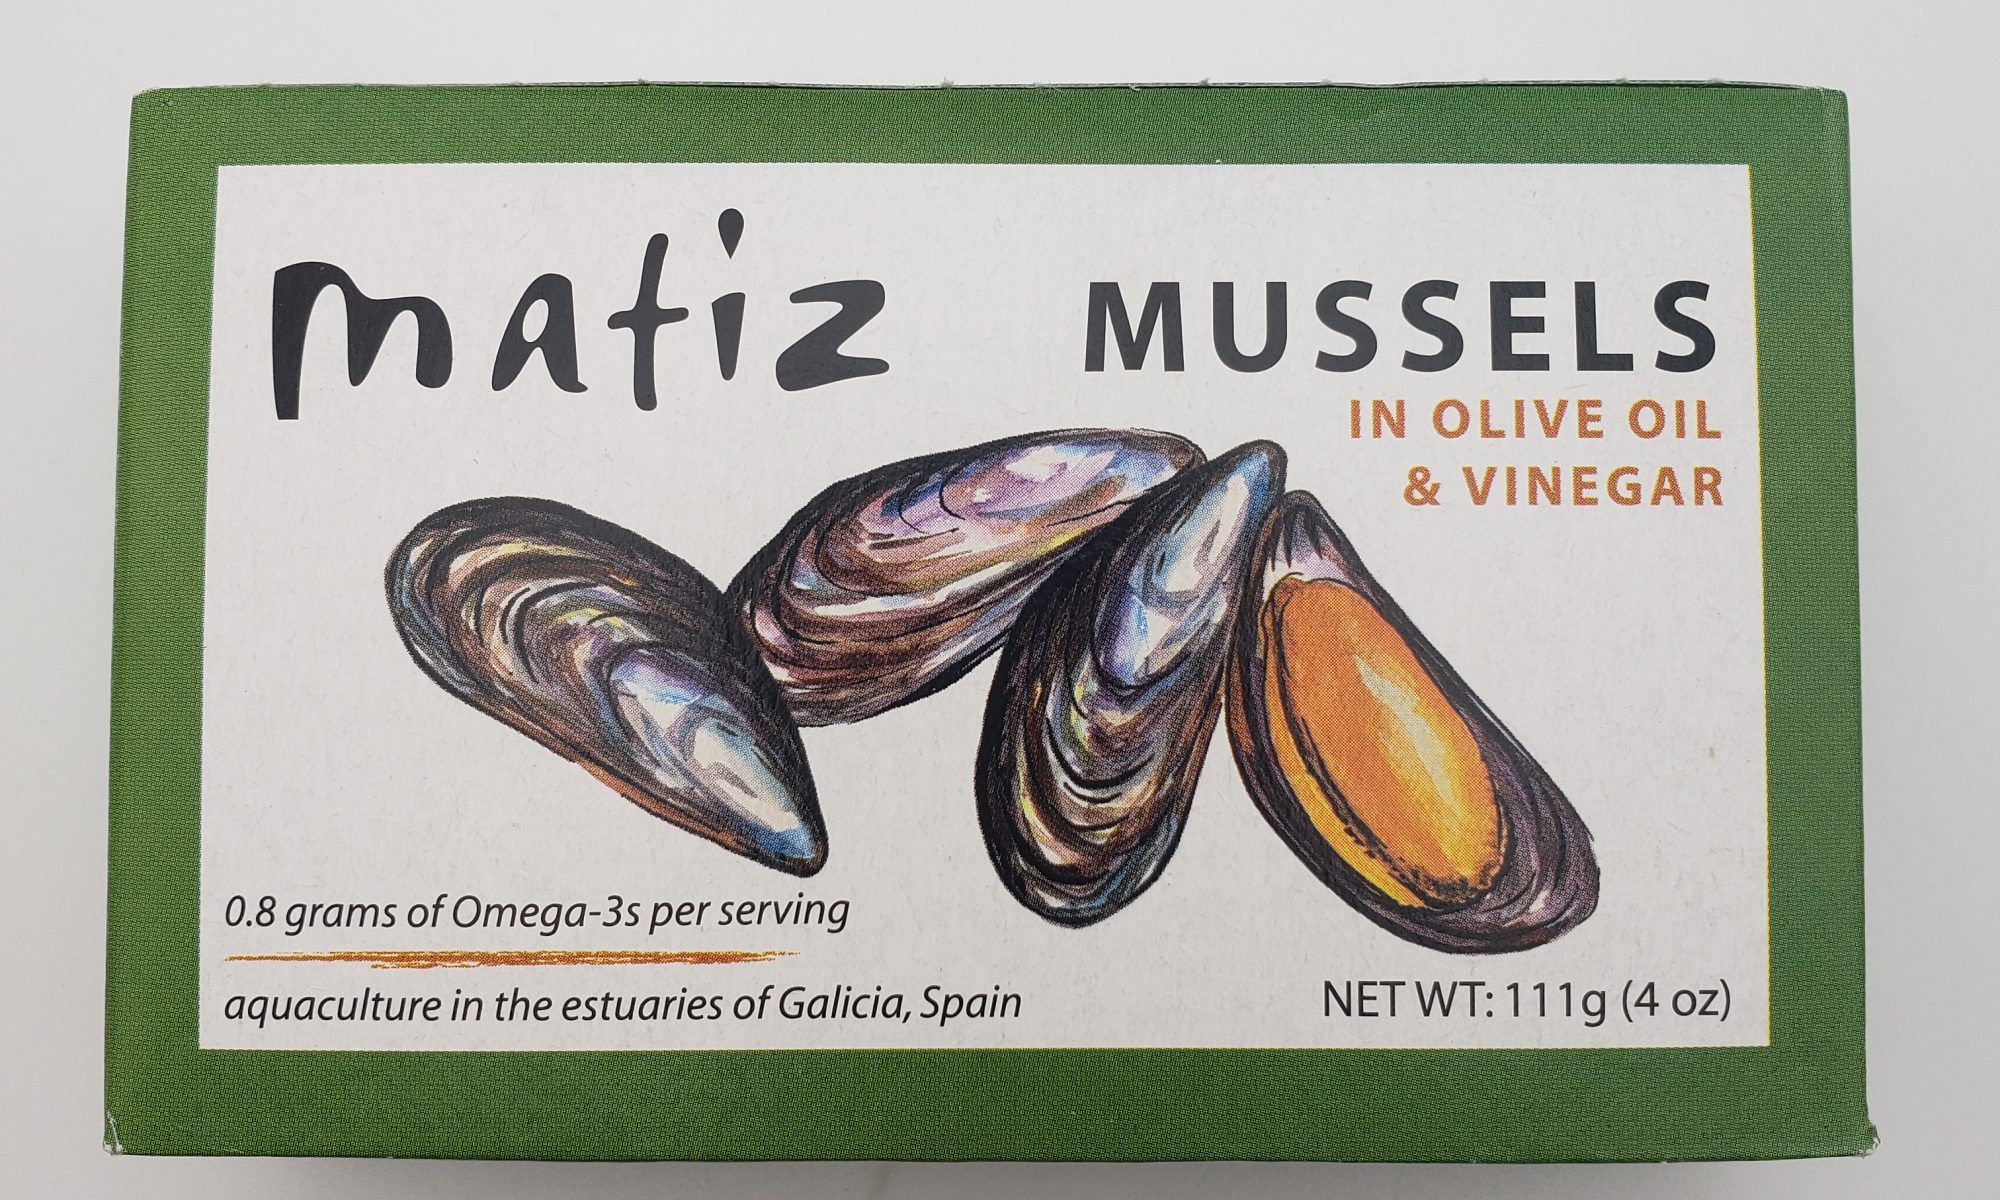 Image of Matiz mussels